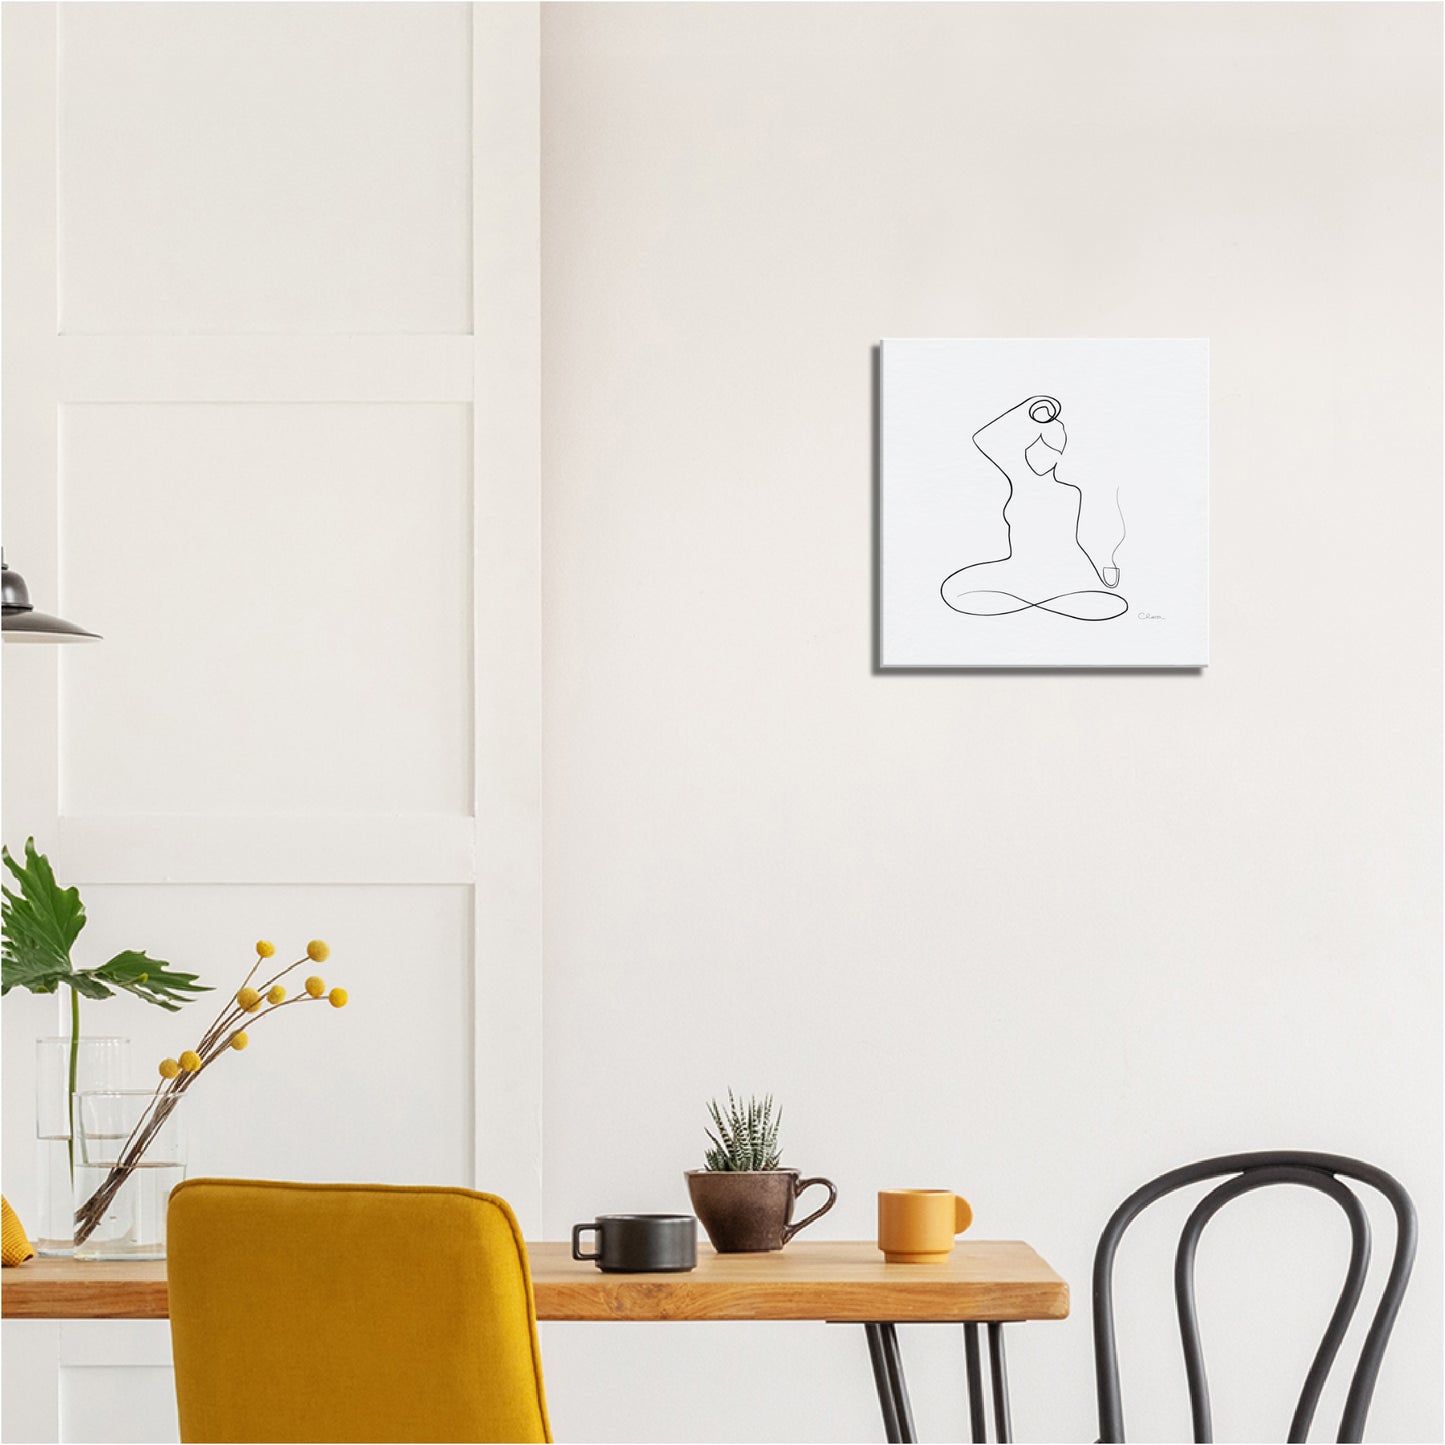 Kaffee oder Tee? Nr. 3-JUDITH CLARA-40x40 cm Leinwand-one-line-art